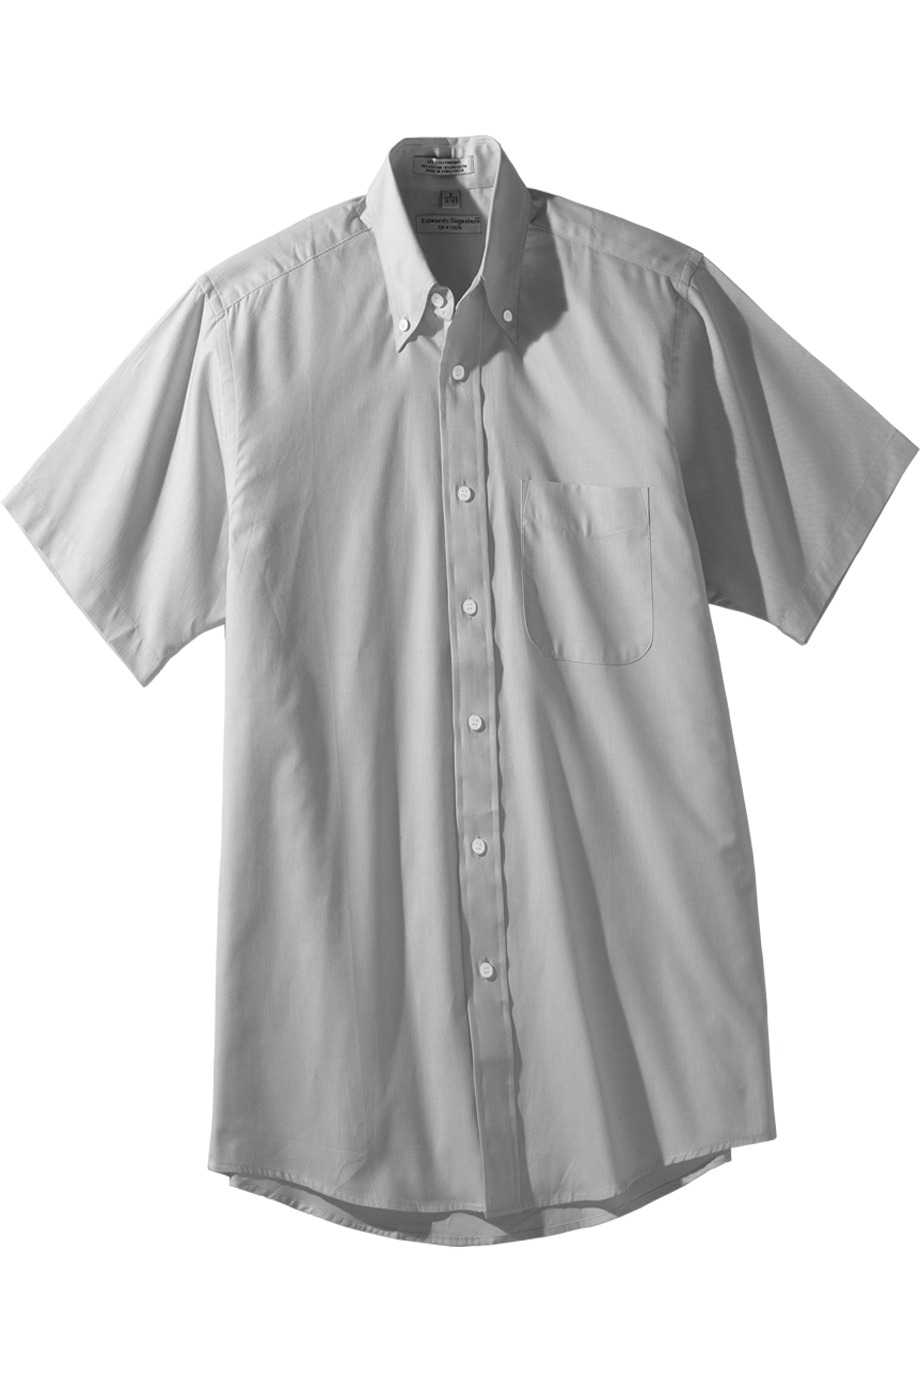 Edwards Garment 1925 - Men's Short Sleeve Pinpoint Oxford Shirt